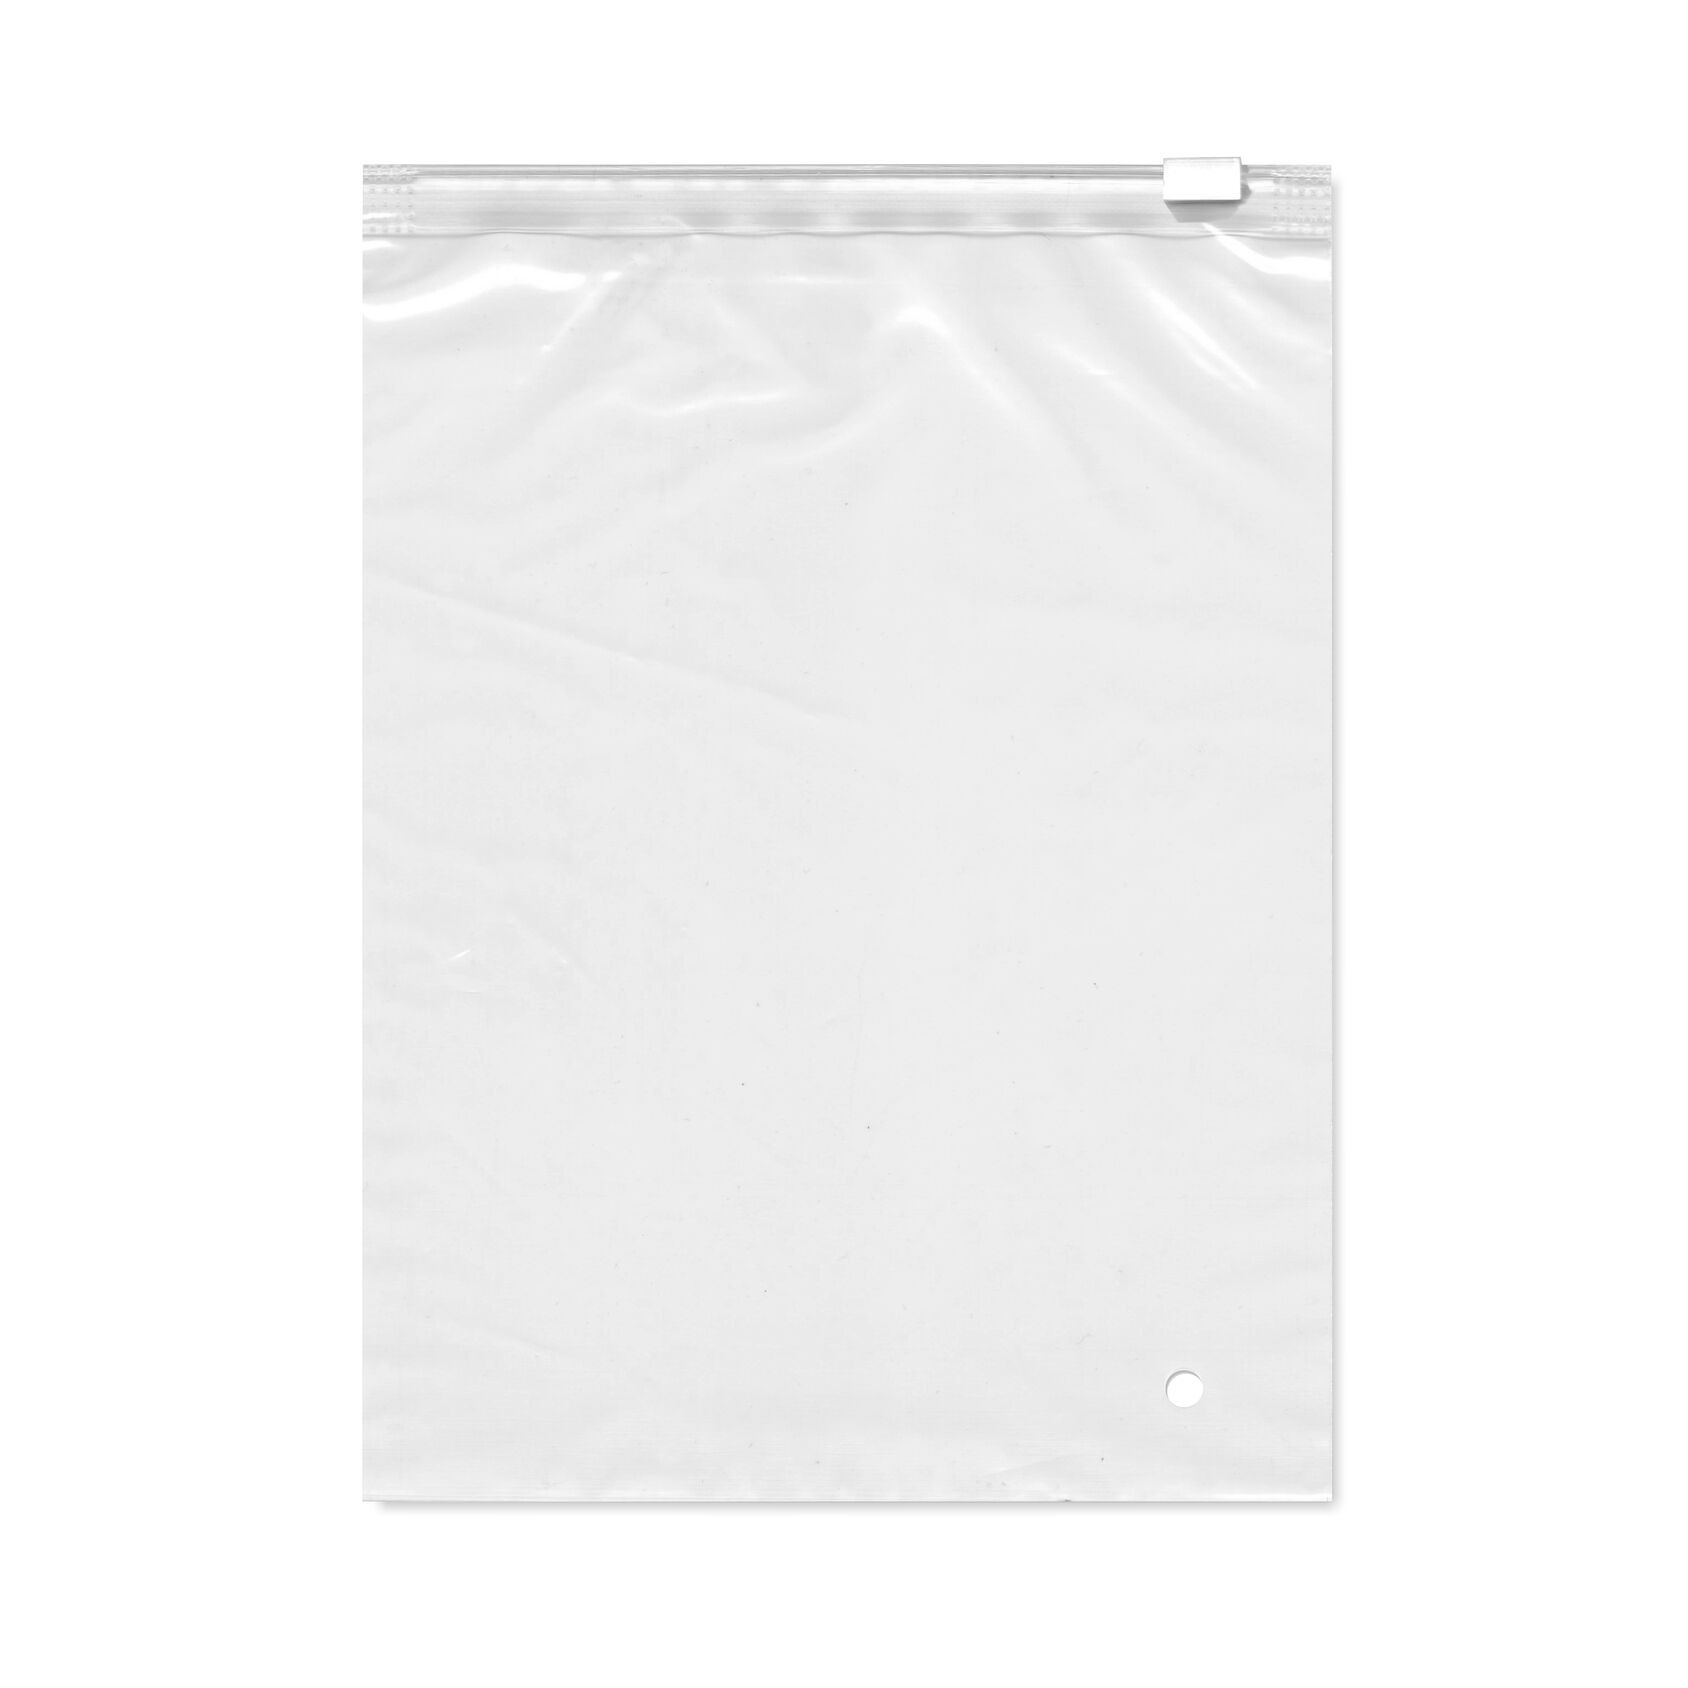 Зип-Лок пакет с бегунком (пакет-слайдер) 25х35 см, 60 мкм, прозрачный